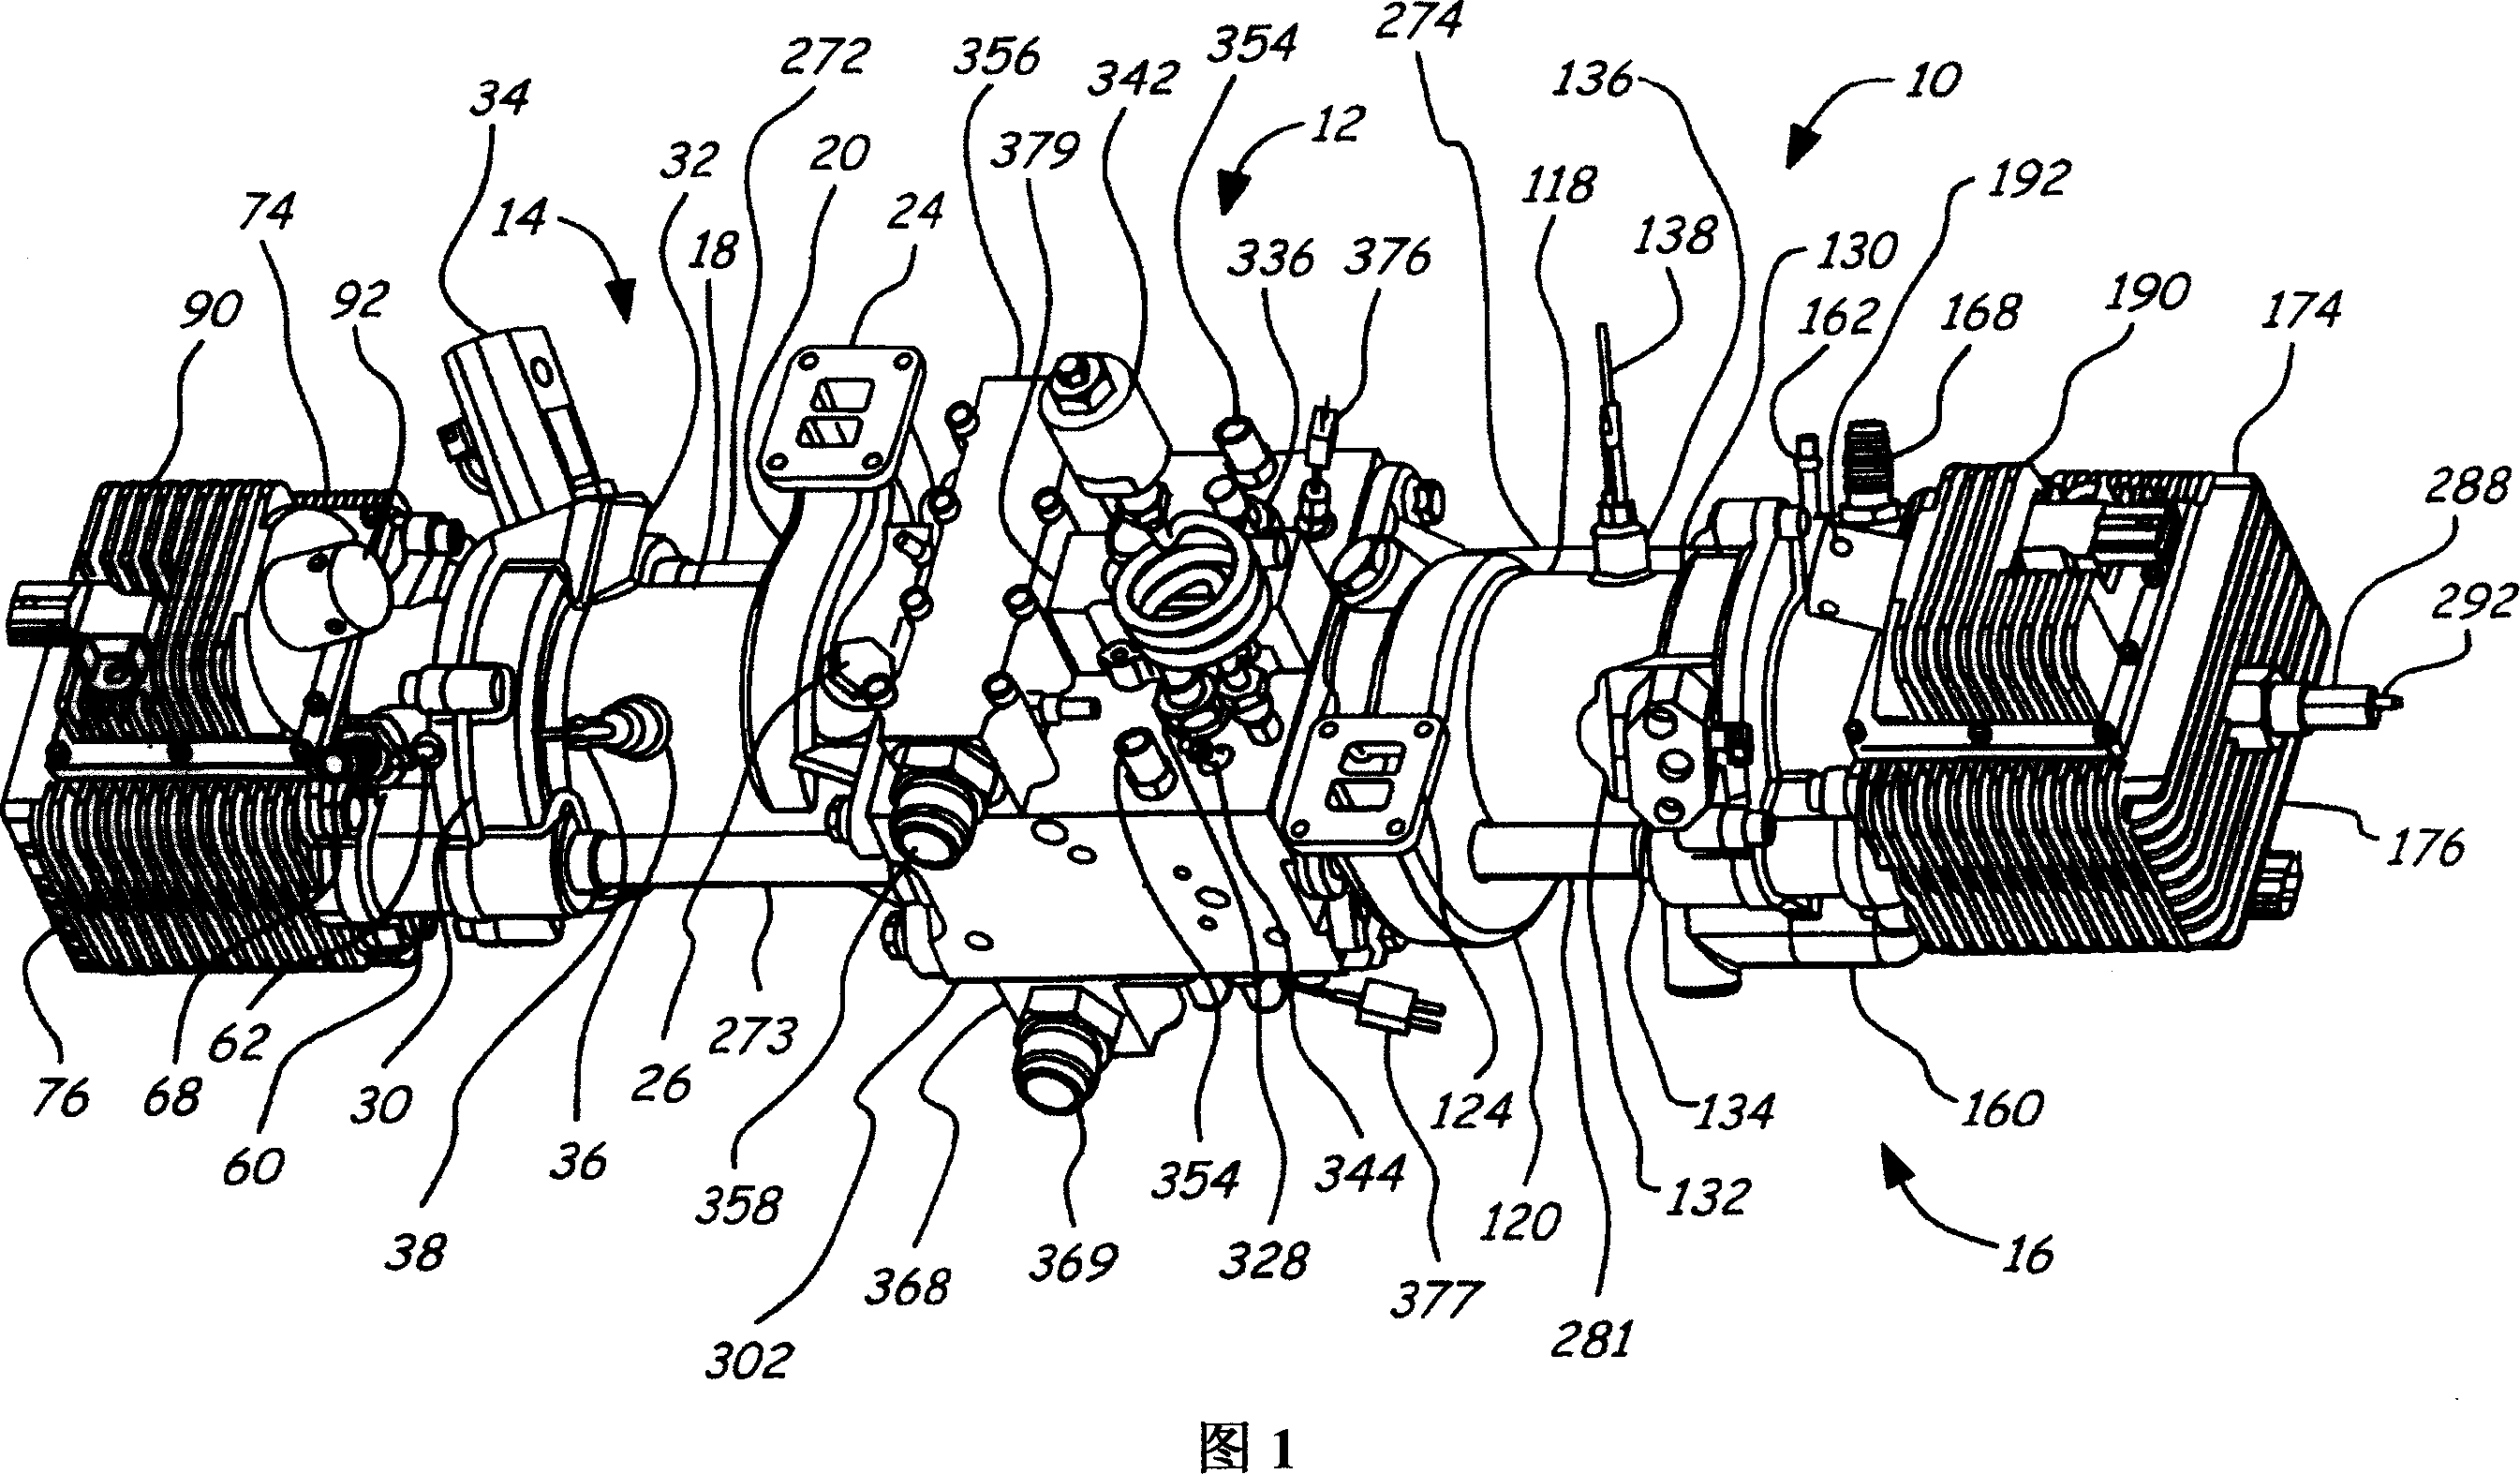 Opposed piston opposed cylinder free piston engine